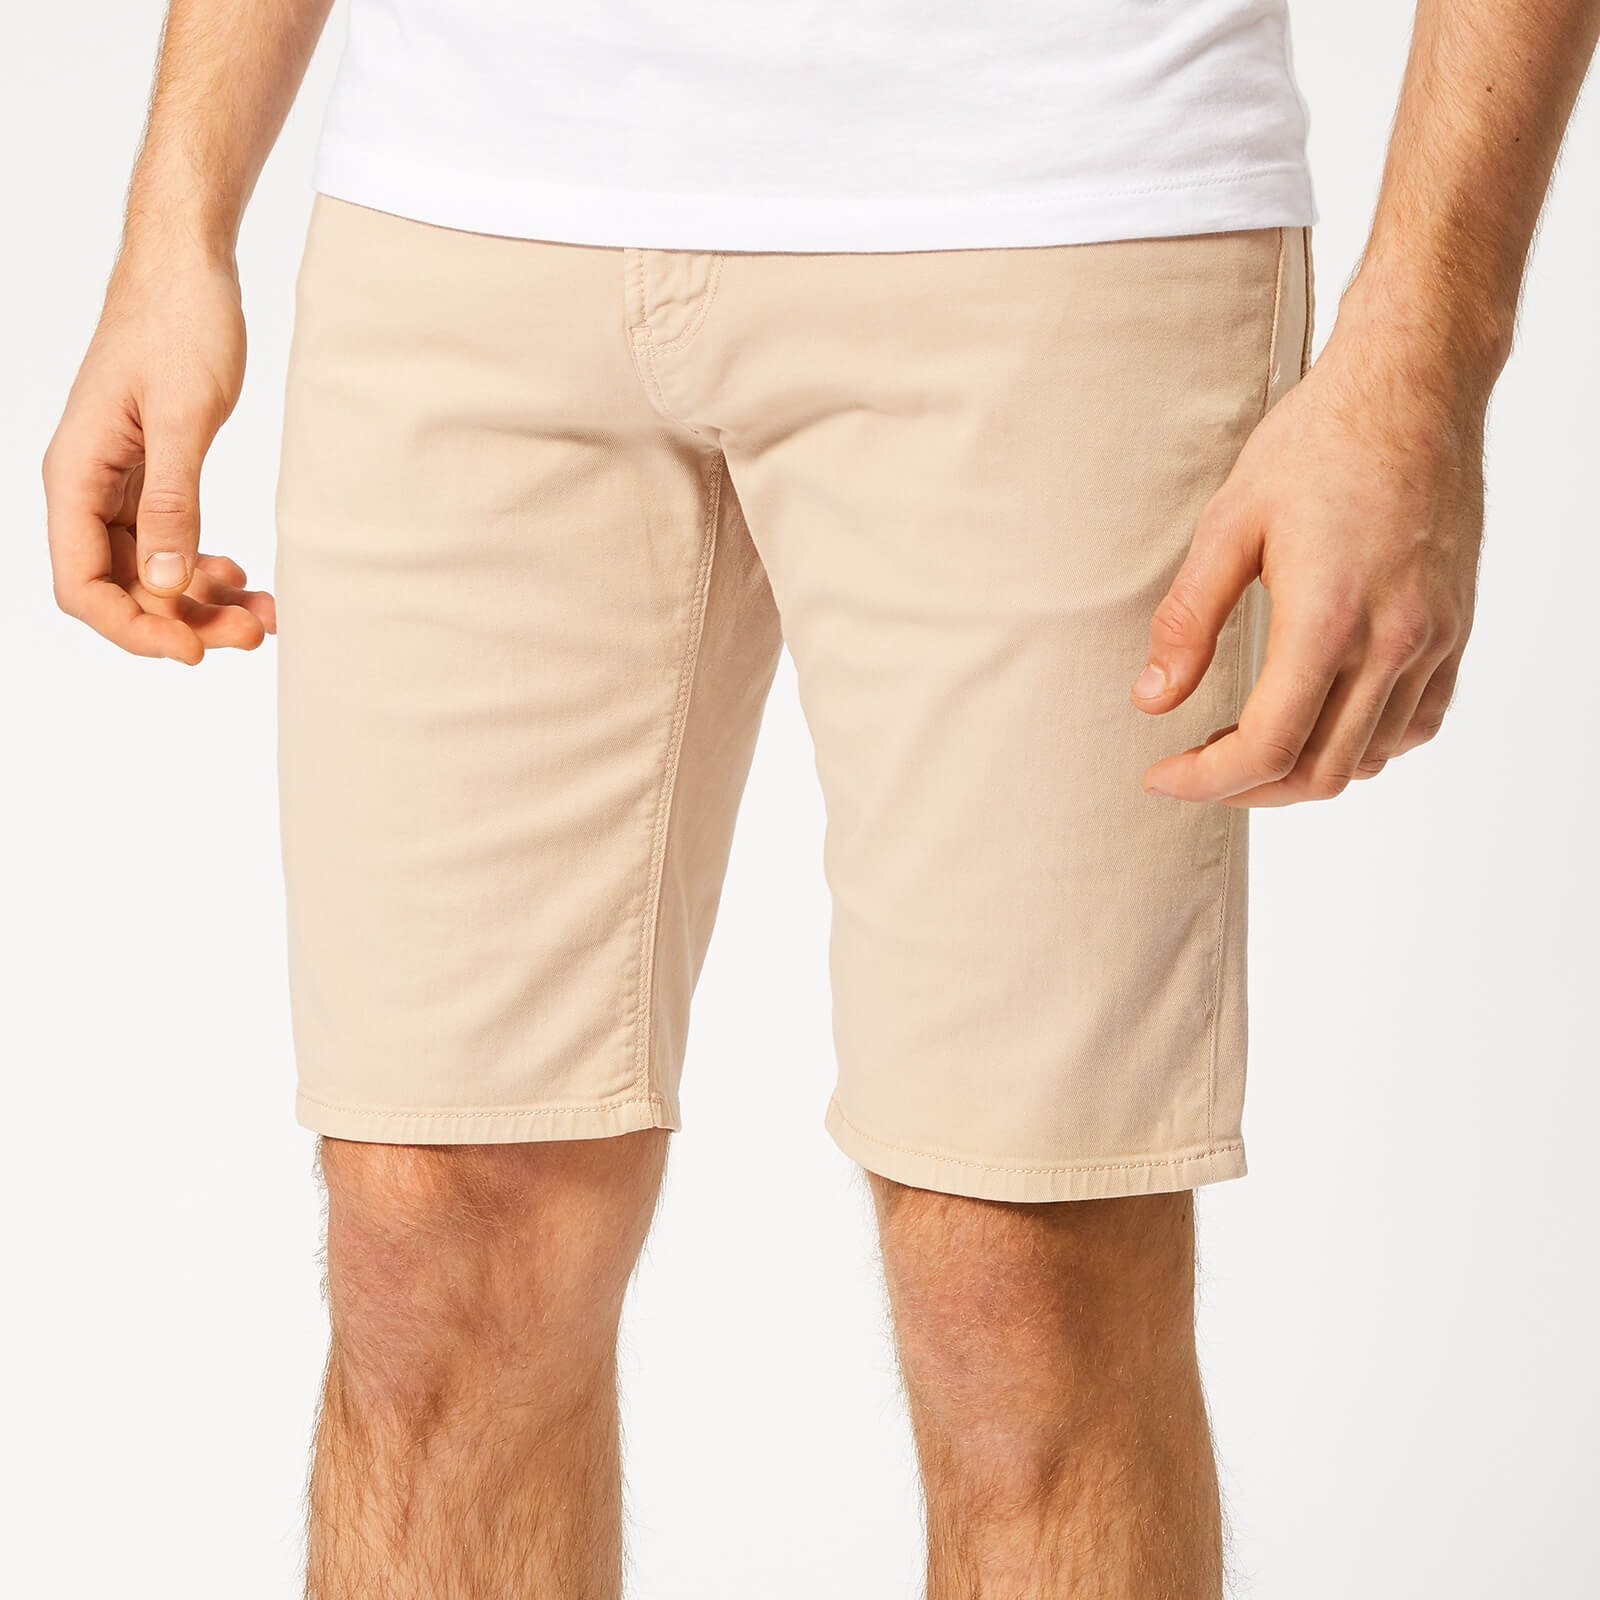 emporio armani mens shorts